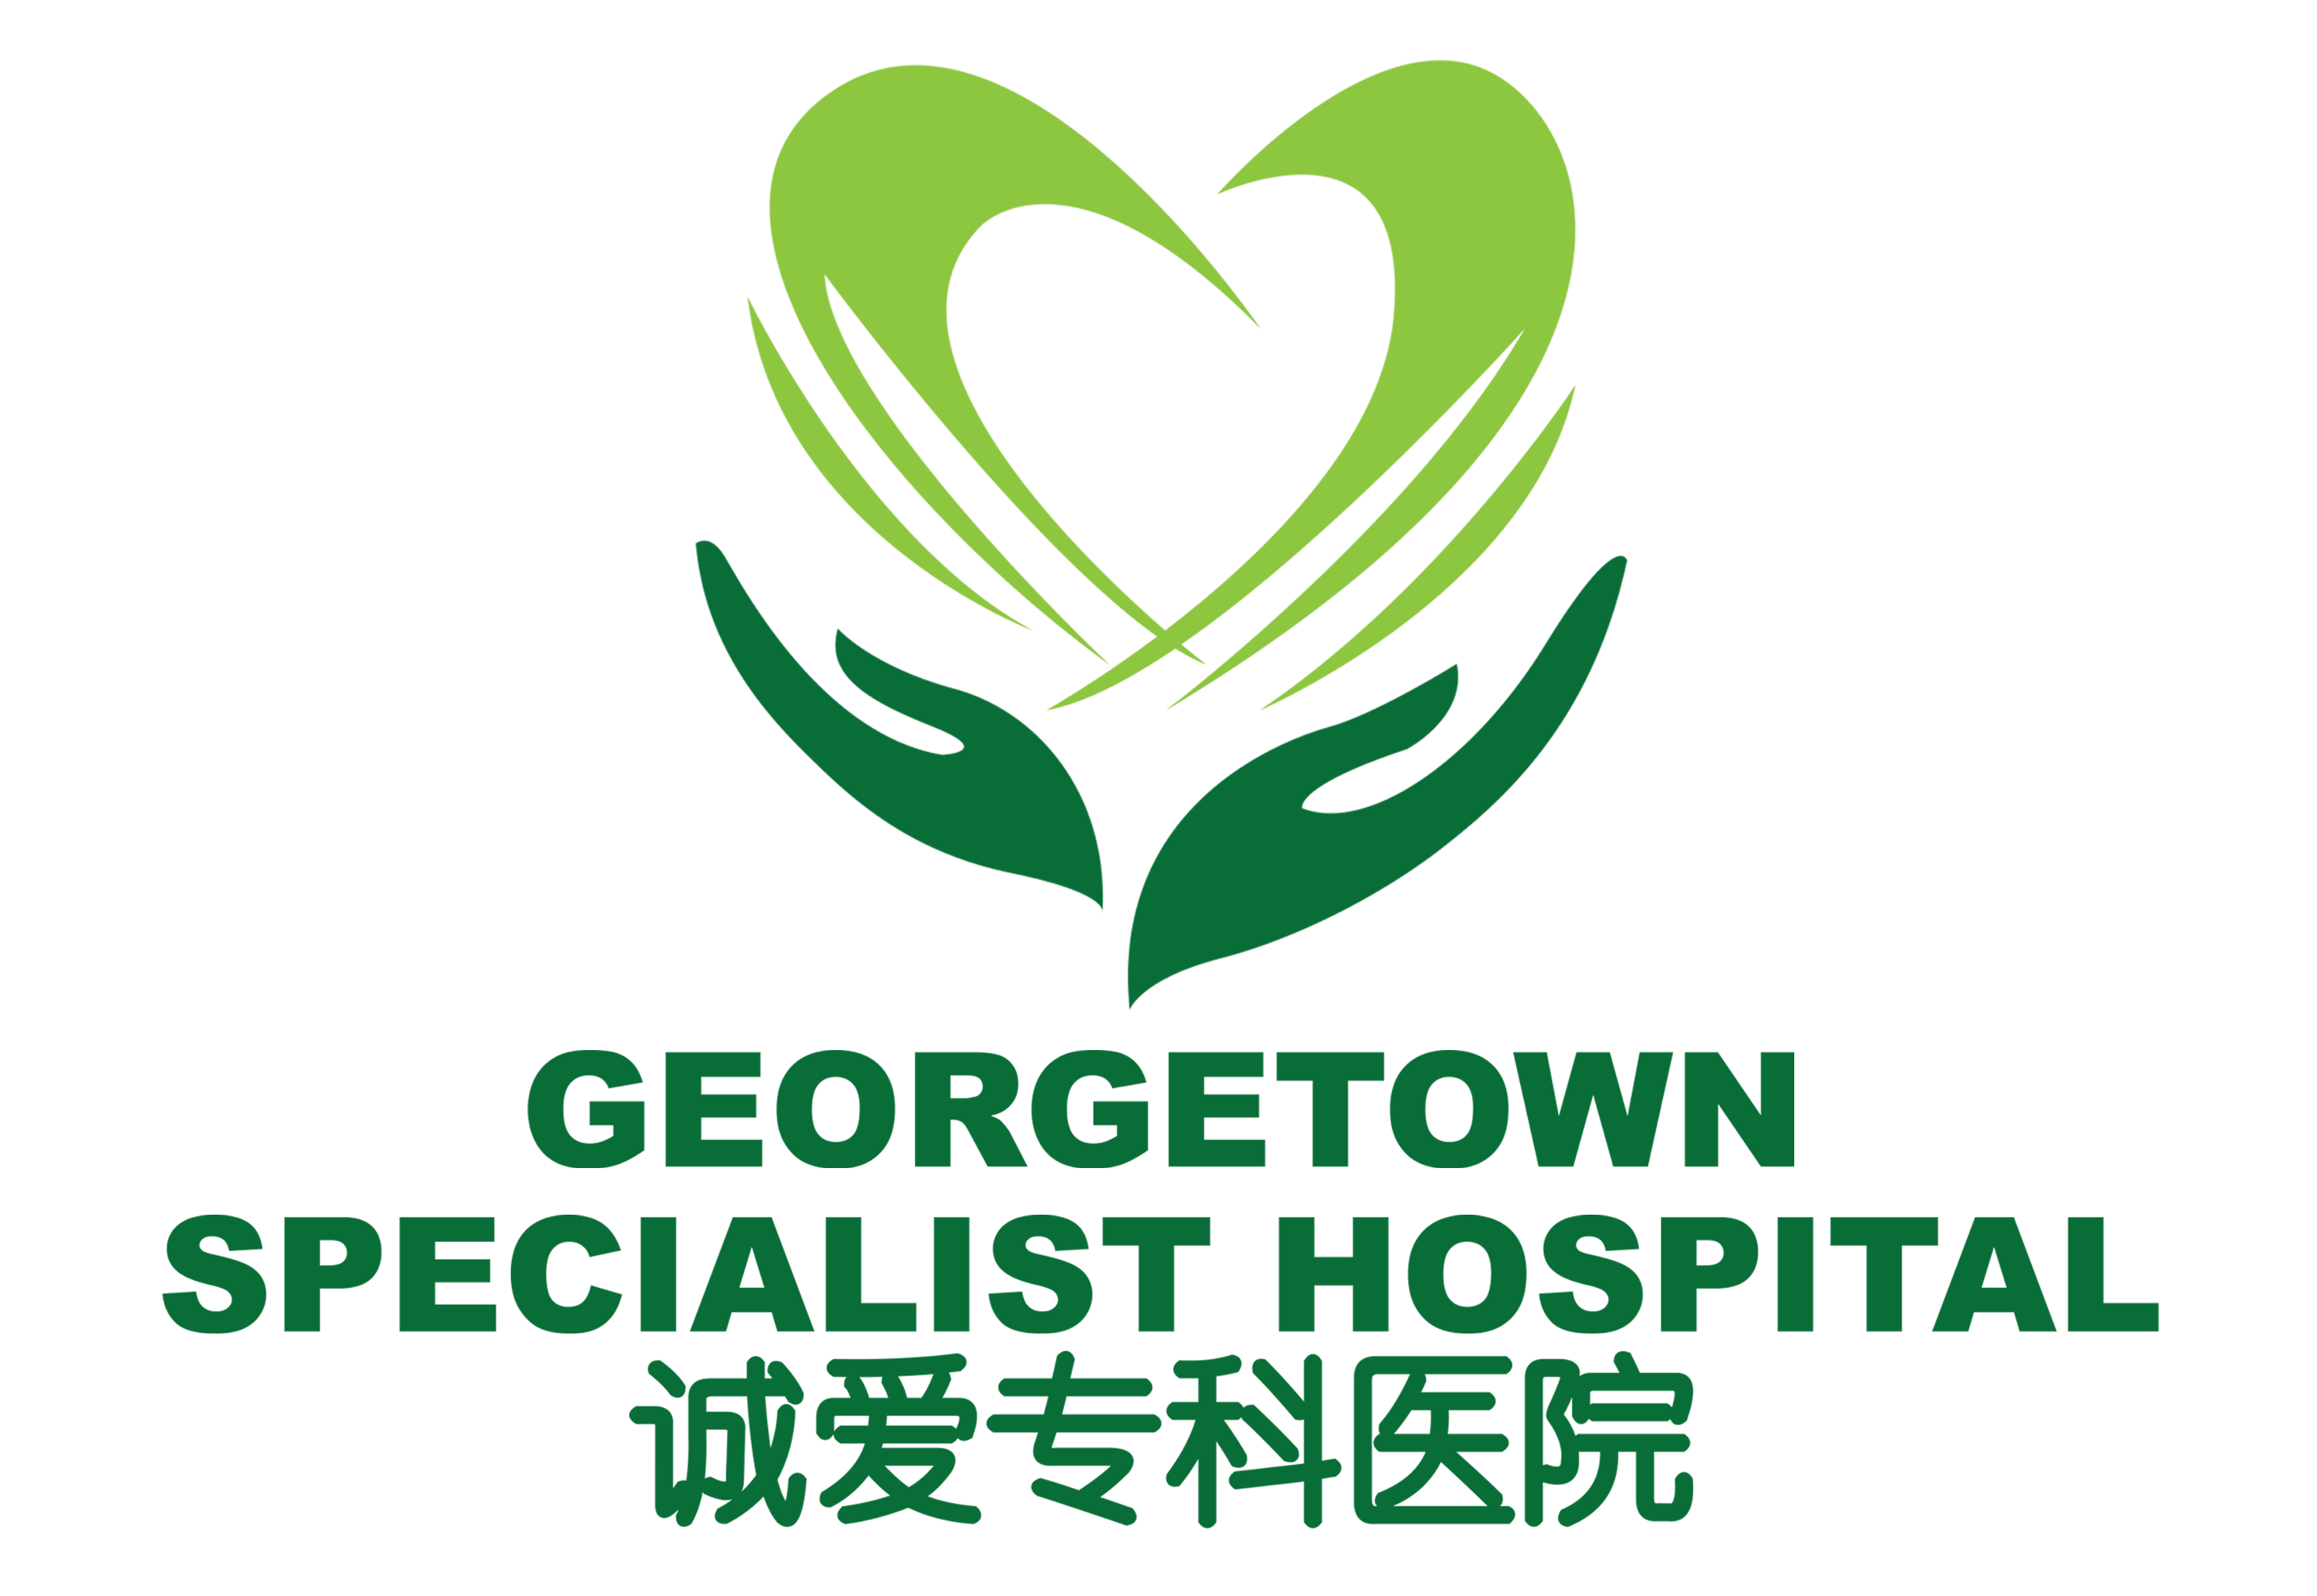 Georgetown Specialist Hospital